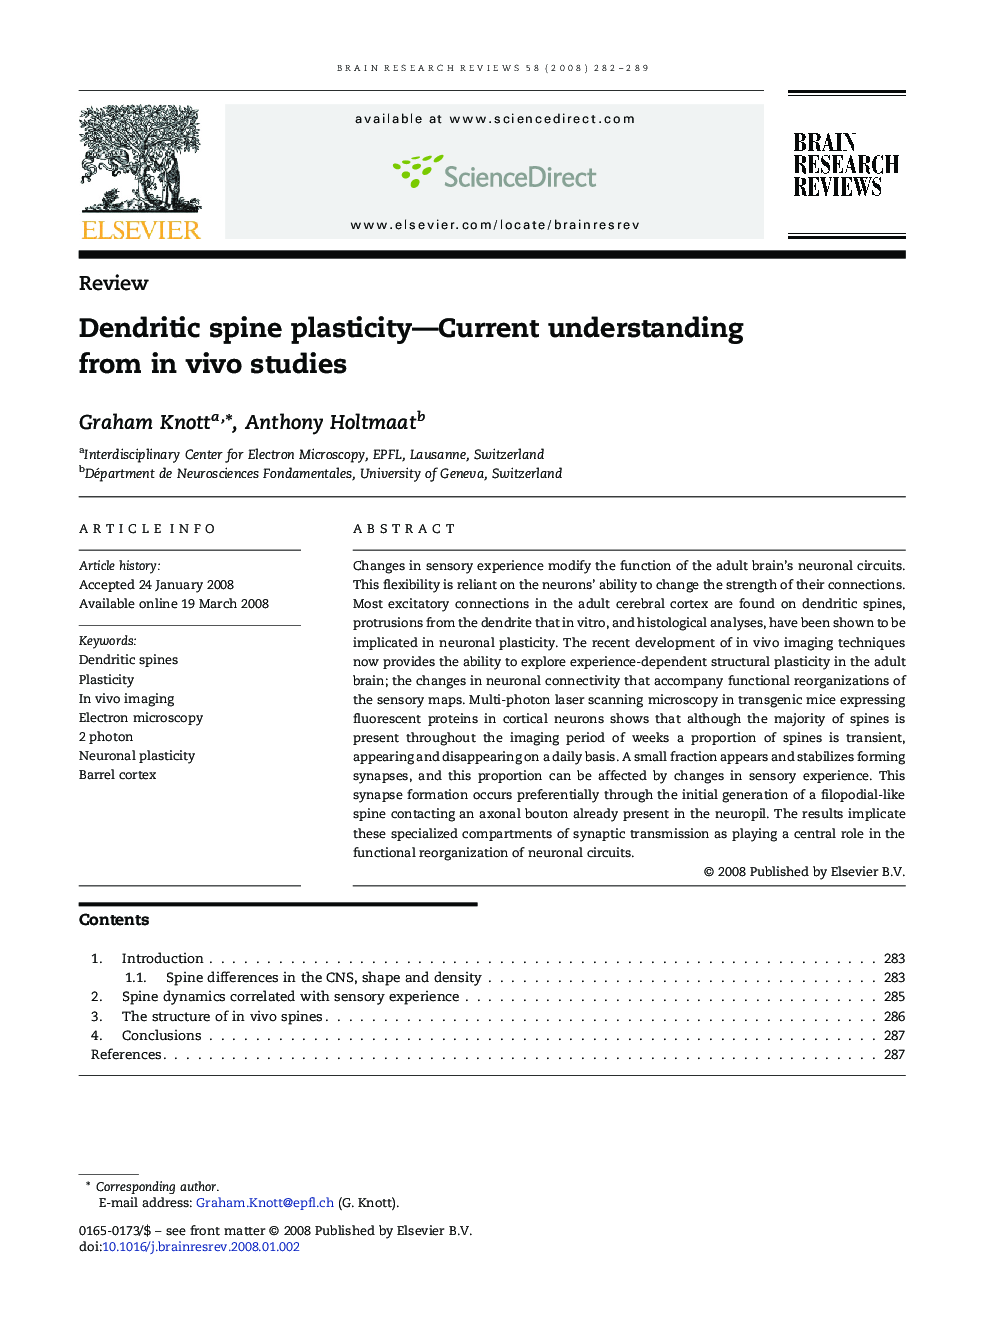 Dendritic spine plasticity—Current understanding from in vivo studies